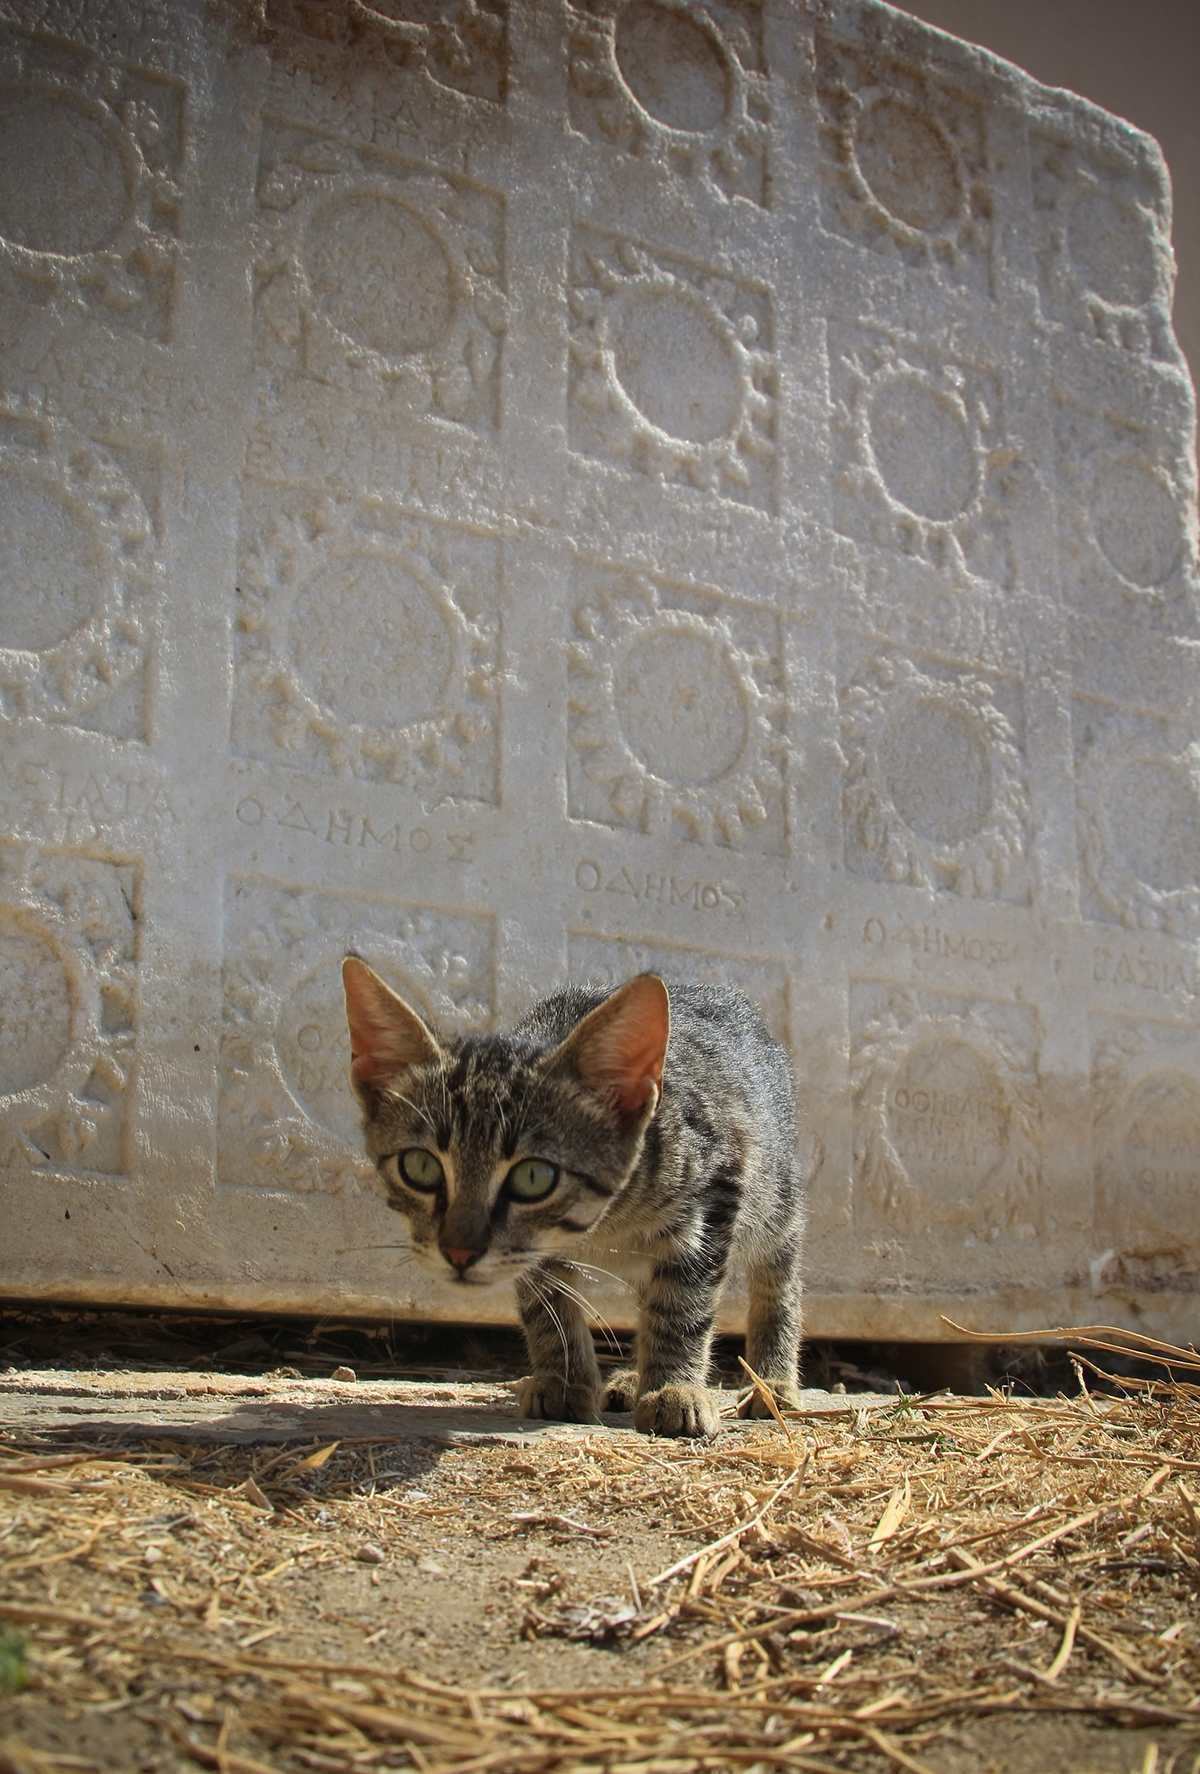 Cat cats kitten Street photo photograghy Greece Mykonos santorini Island meow kitty digital Travel exotic